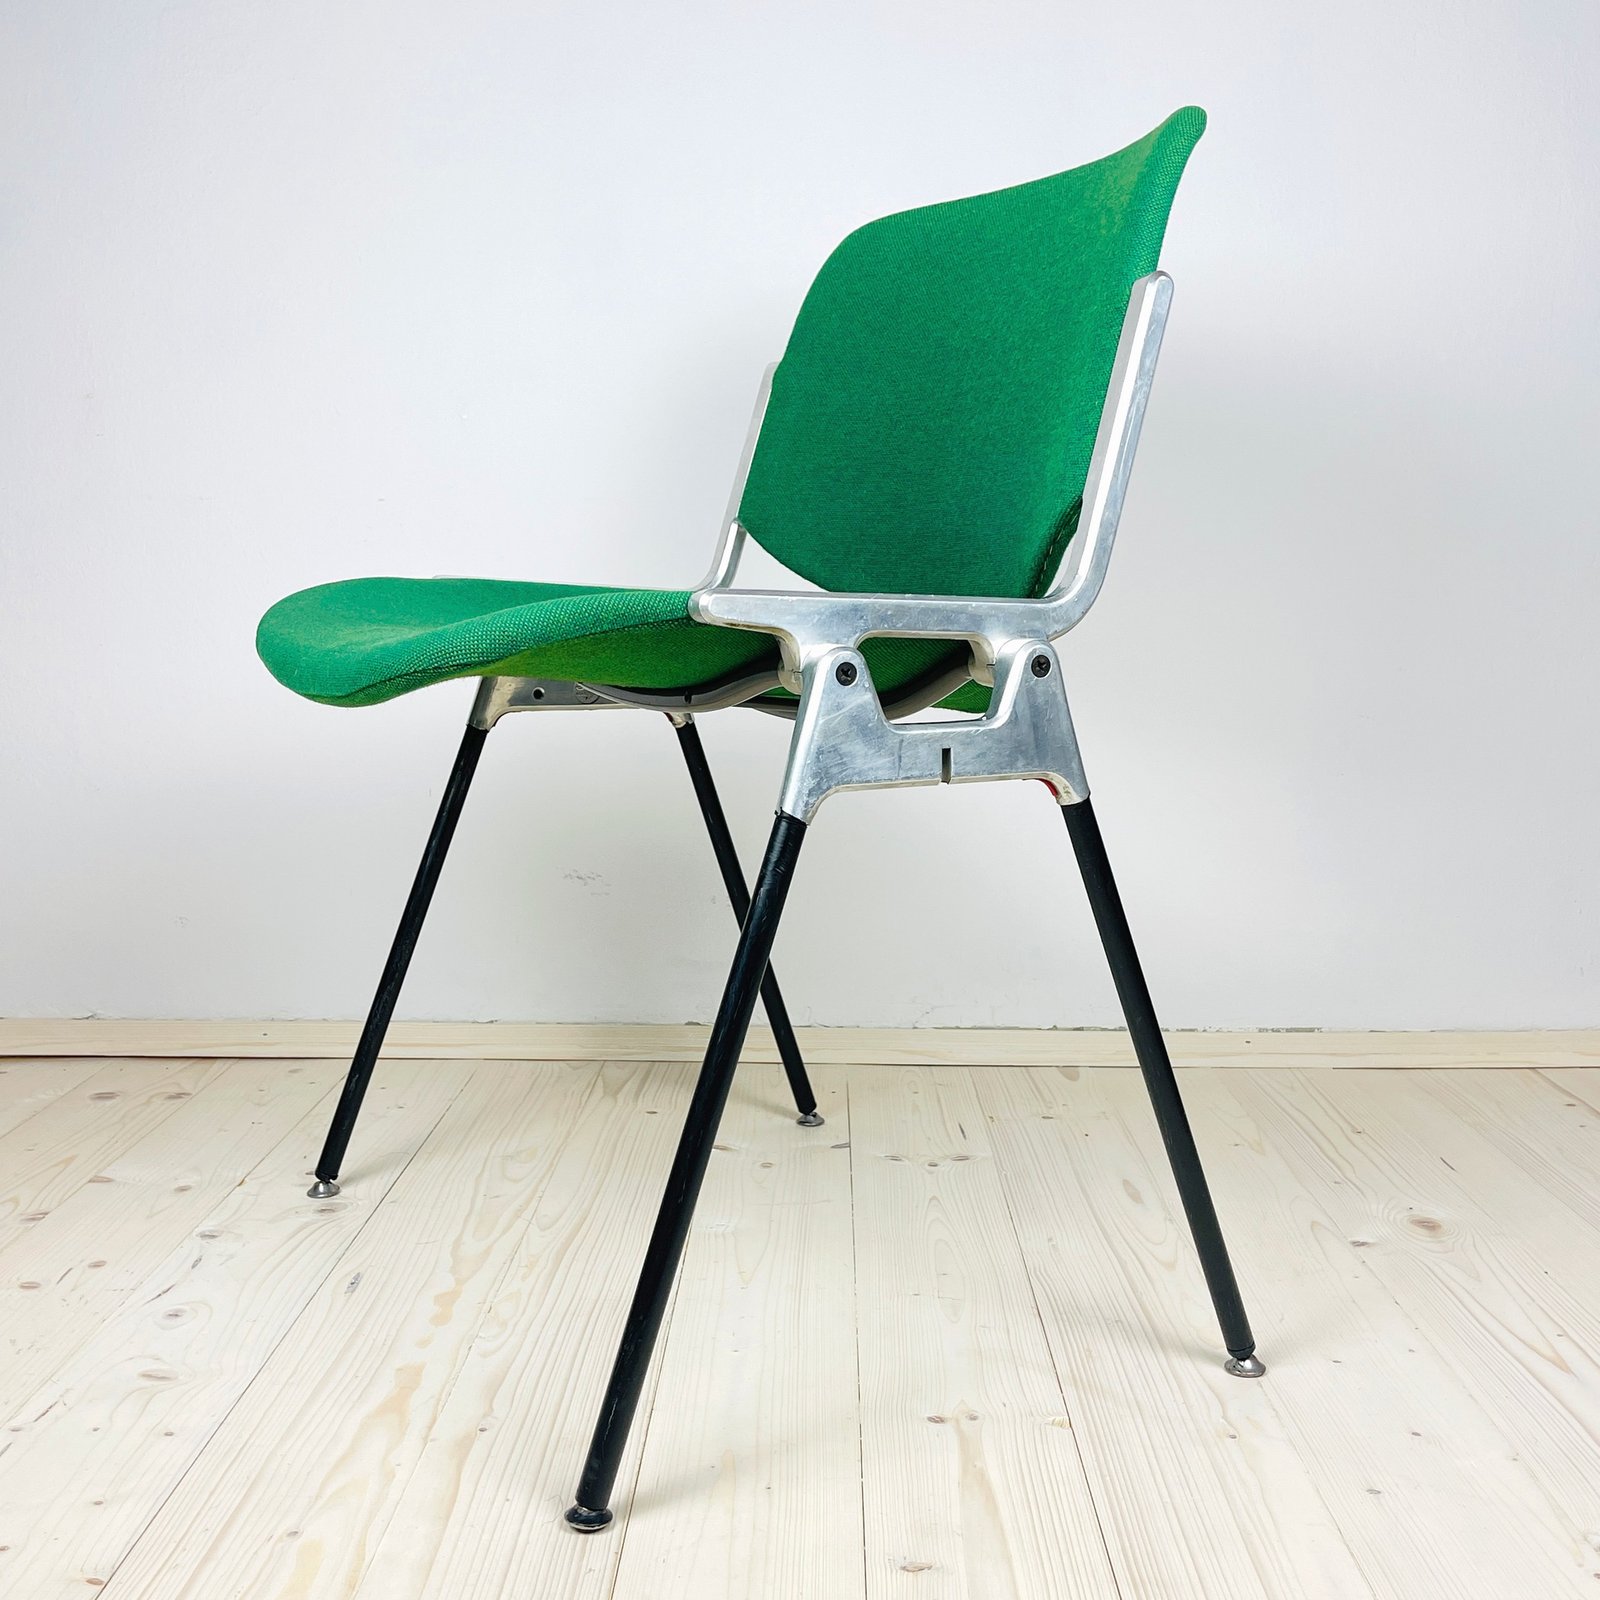 Mid-century Chair DSC 106 by Giancarlo Piretti for Castelli Italy 1960s Desk Dining Modernist Italian Loft Office